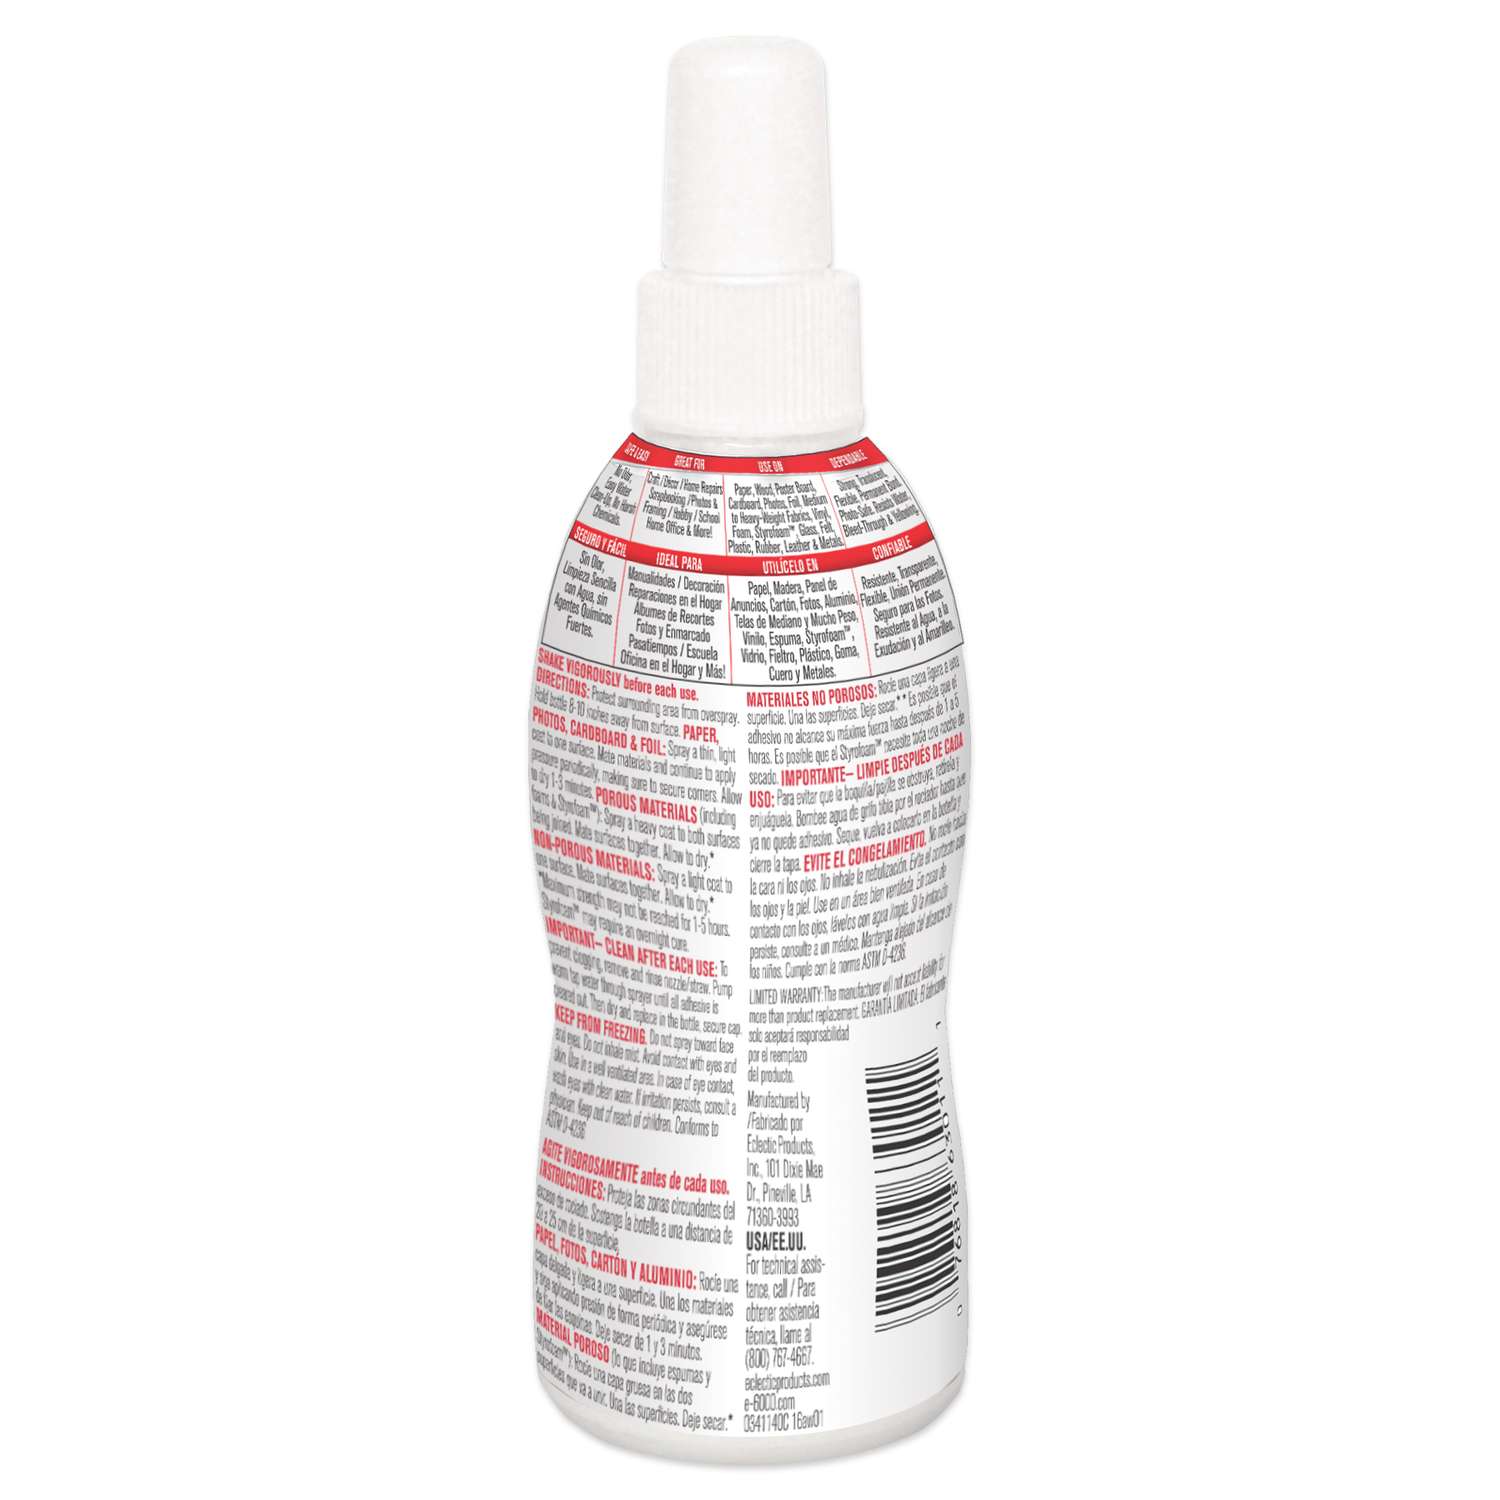 Spray Web Adhesive Glue AE-600